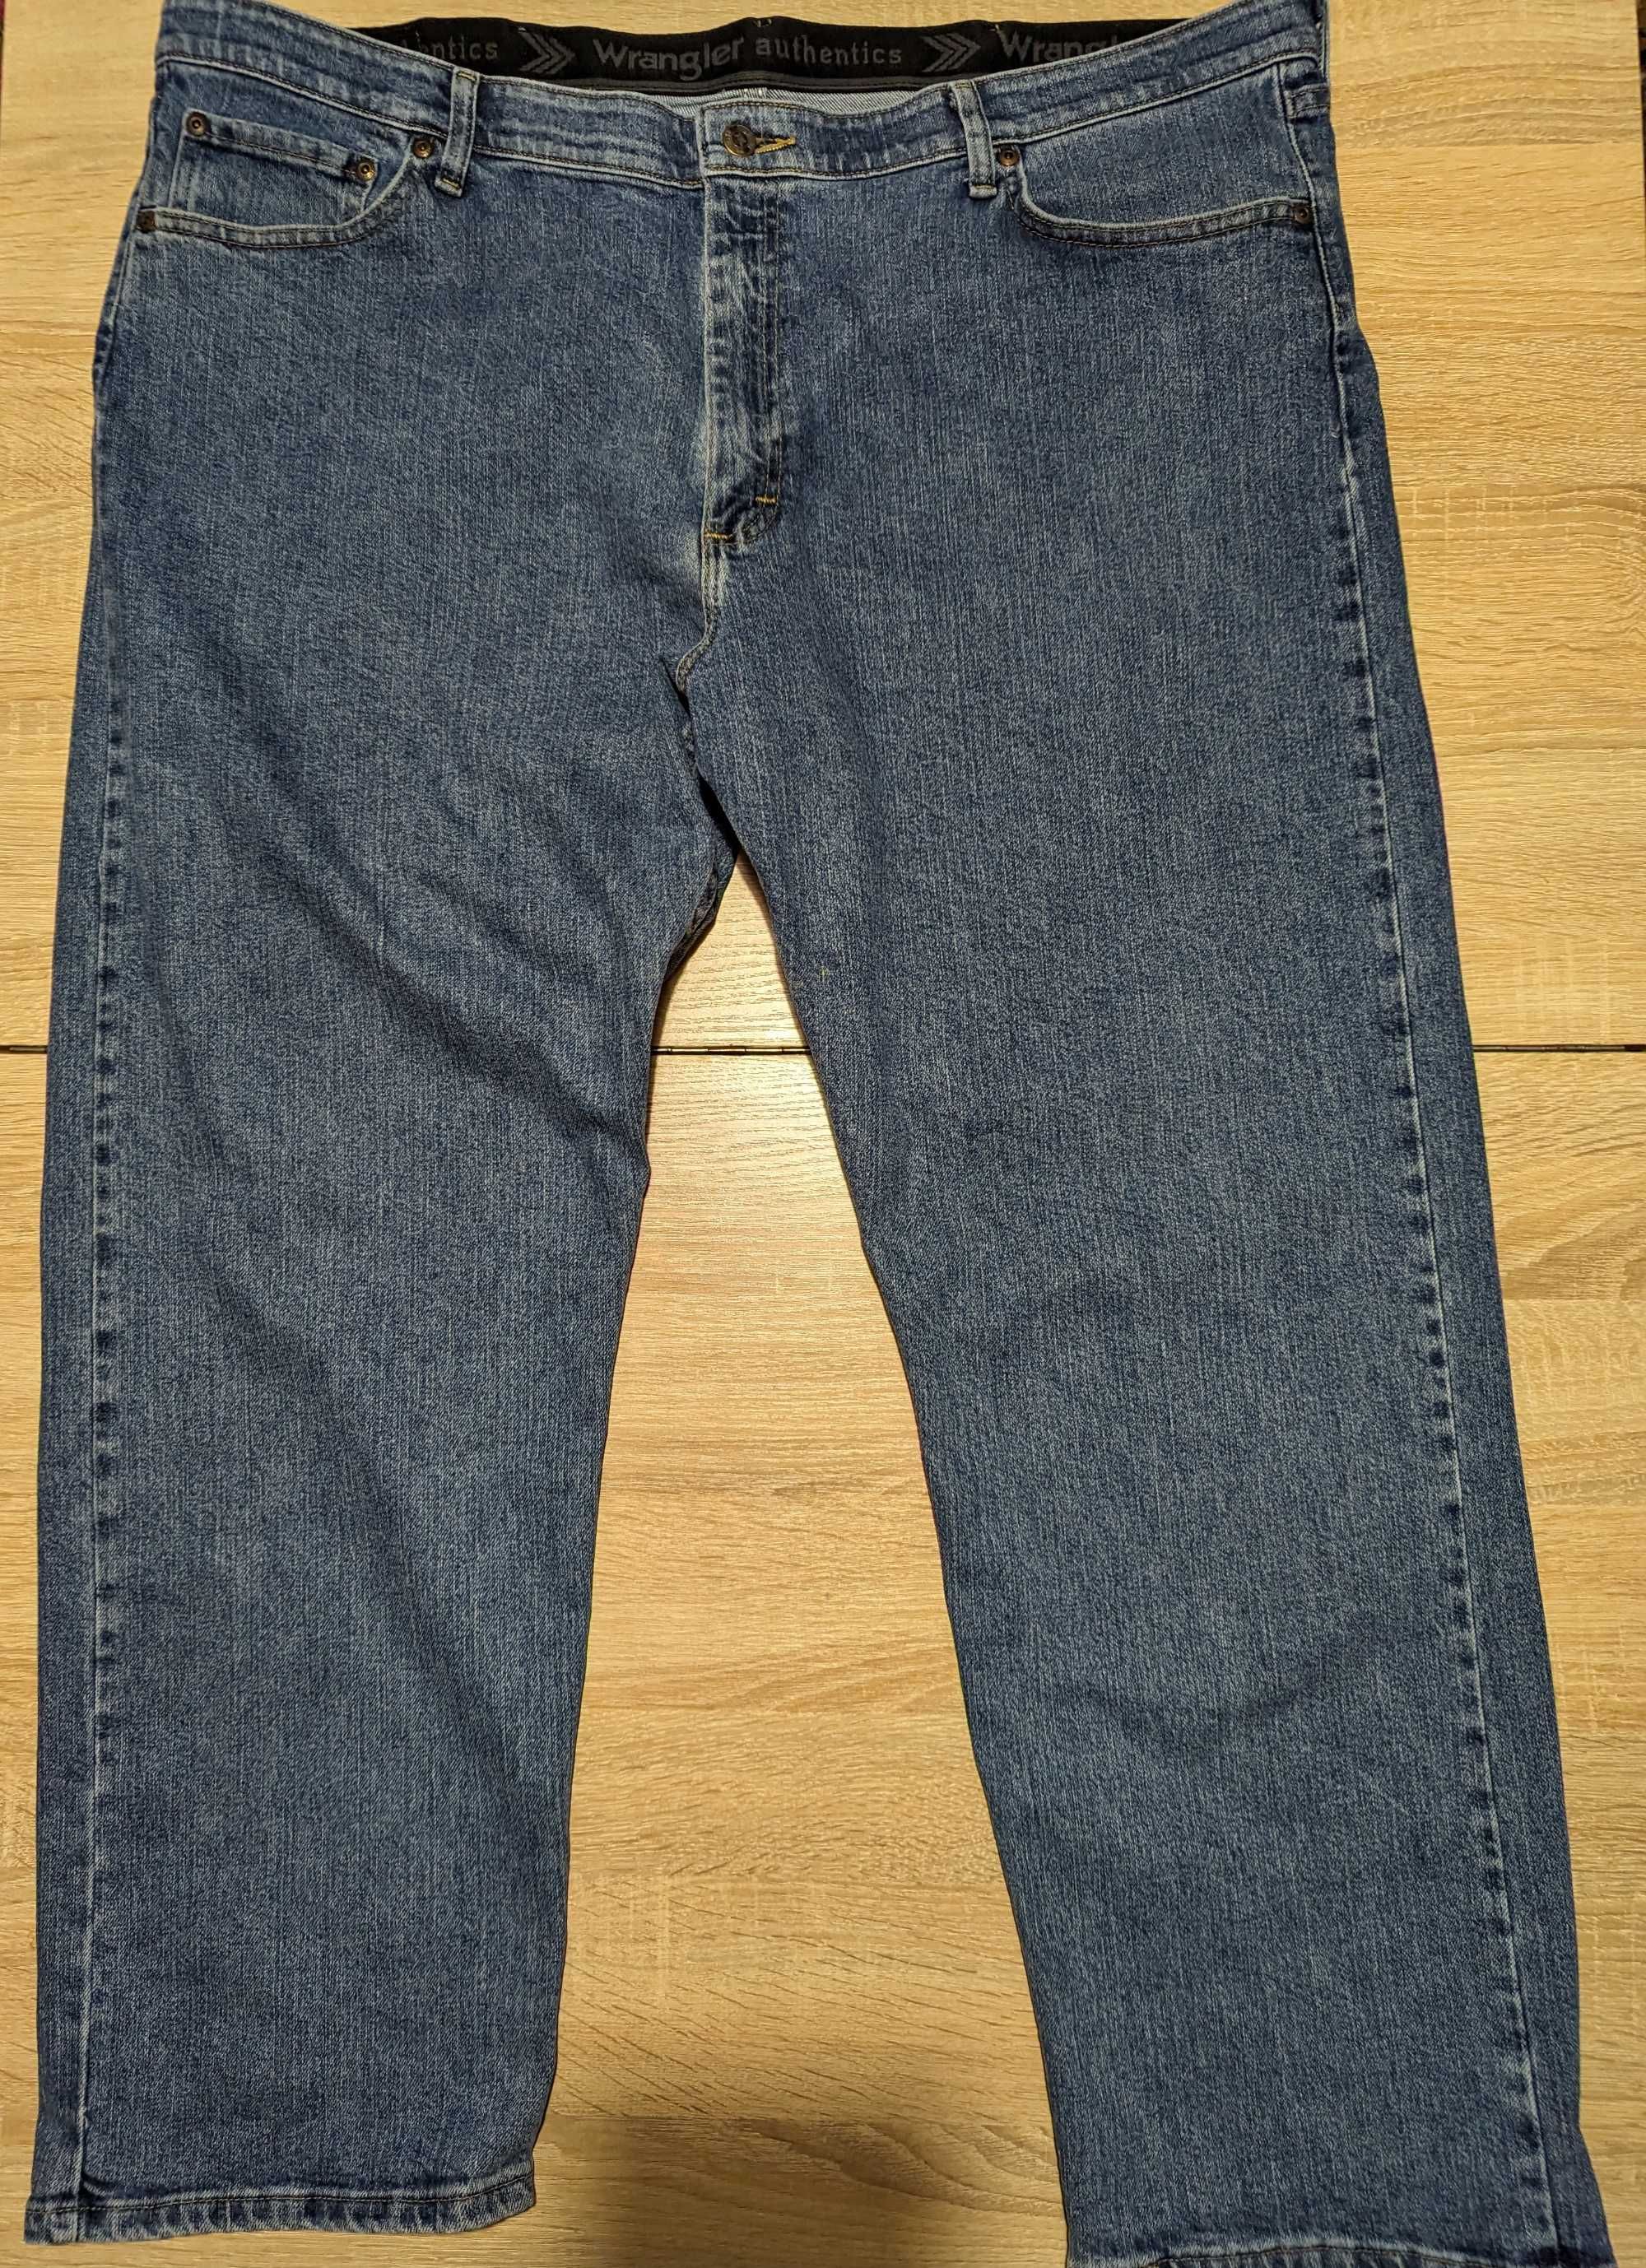 Мужские джинсы Wrangler, Мексика. Размер 42.